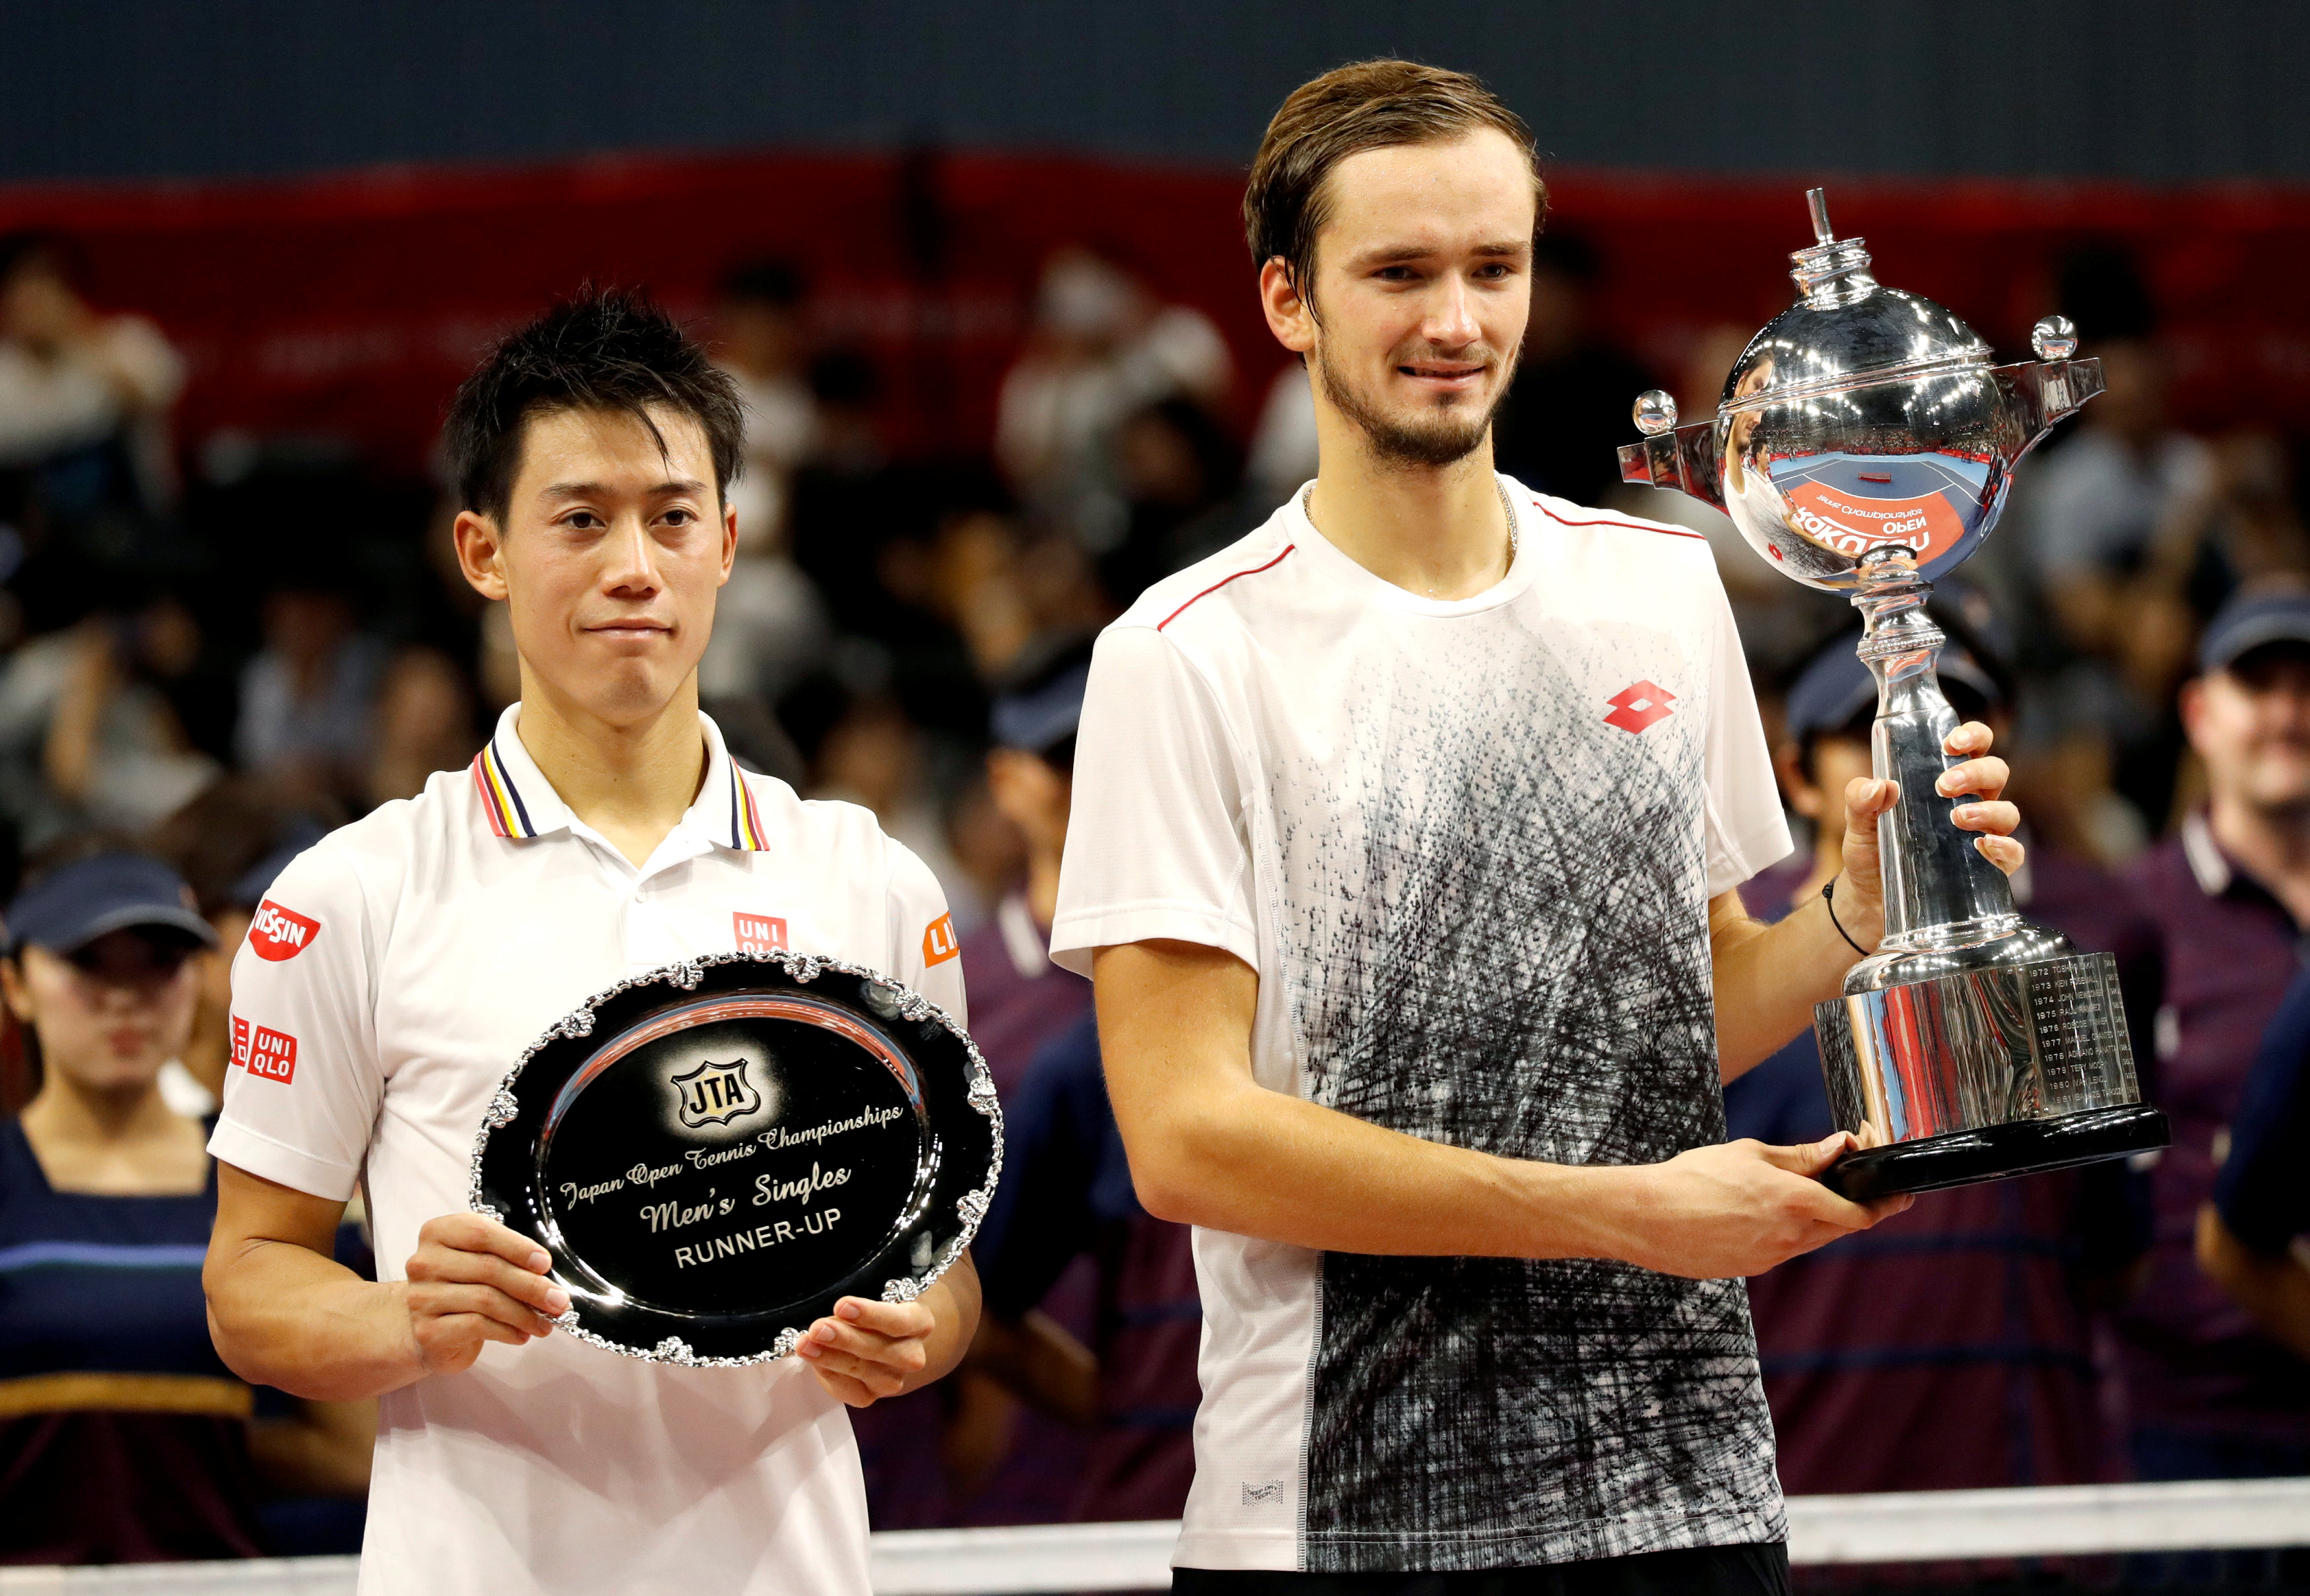 Tennis: Medvedev stuns Nishikori to win Japan Open title